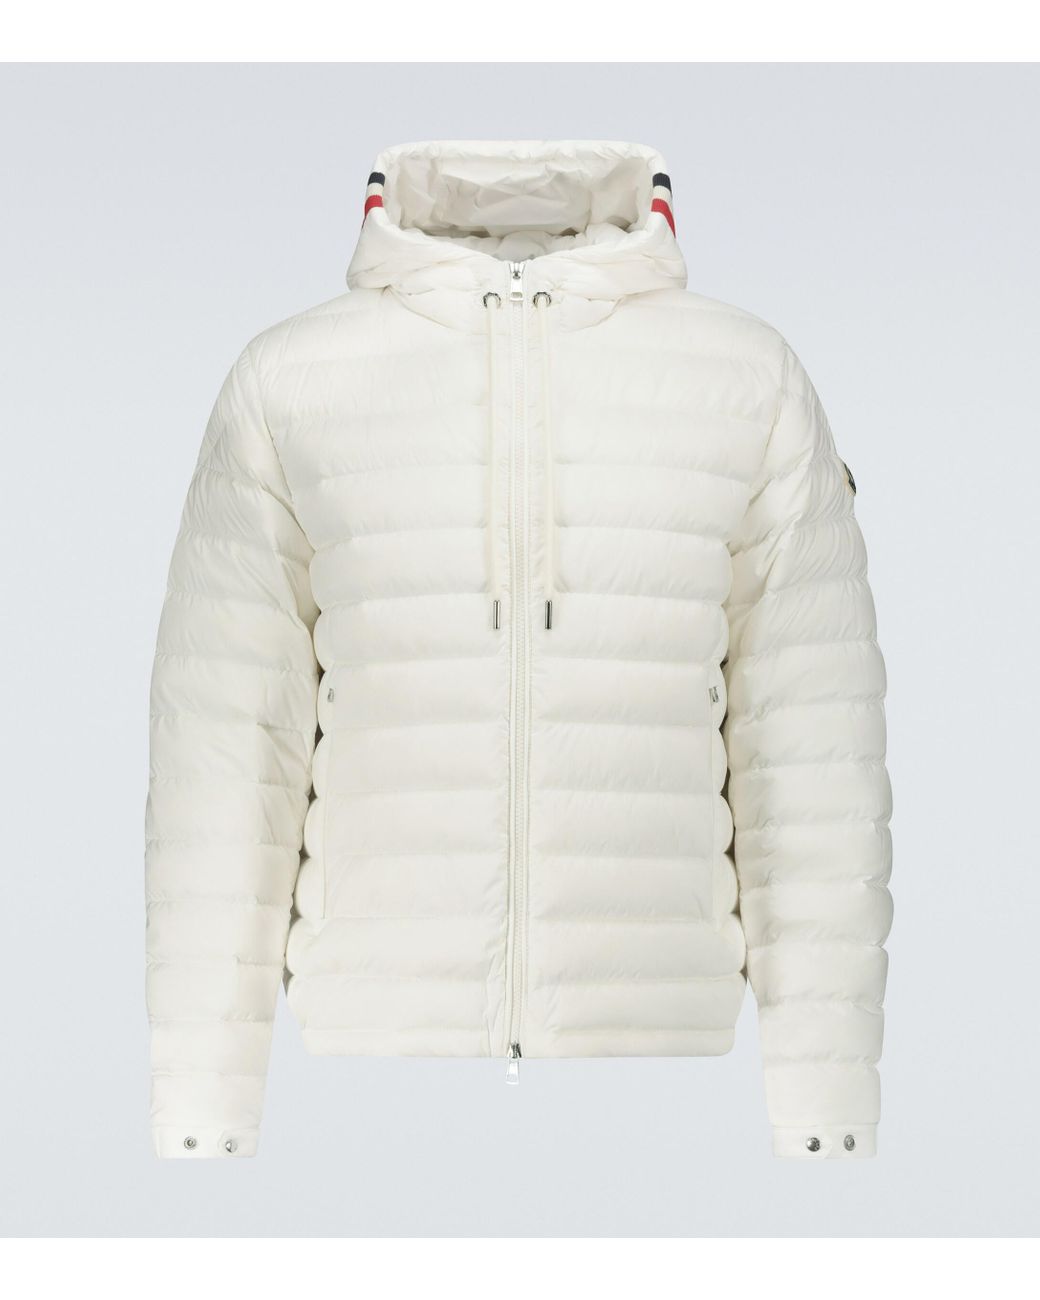 Moncler Eus Hooded Down Jacket in White for Men - Lyst